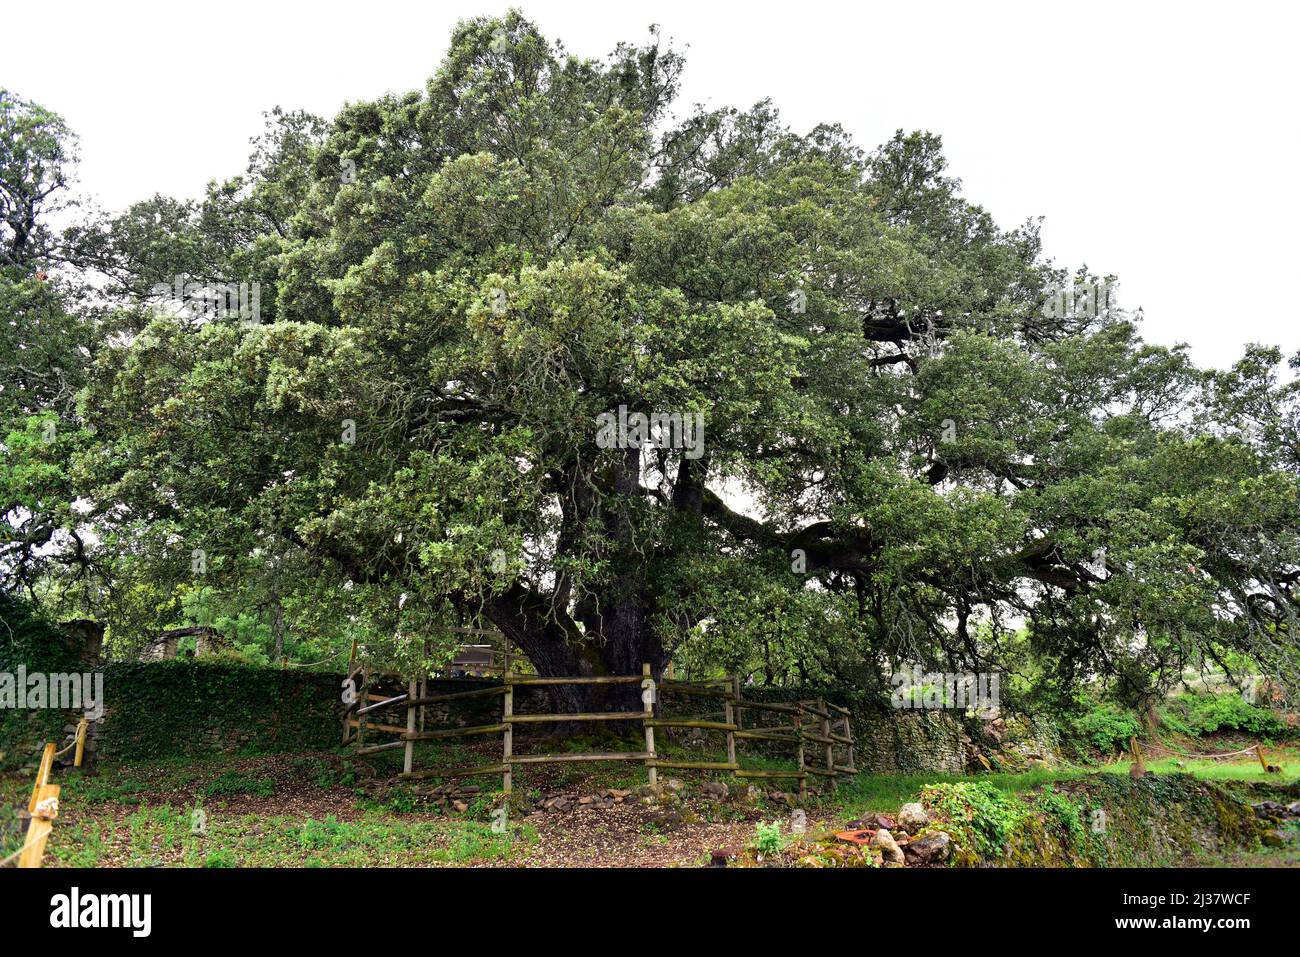 Evergreen oak (Quercus ilex ballota or Quercus ilex rotundifolia) is an evergreen tree native to Mediterranean basin (Iberian Peninsula and Stock Photo